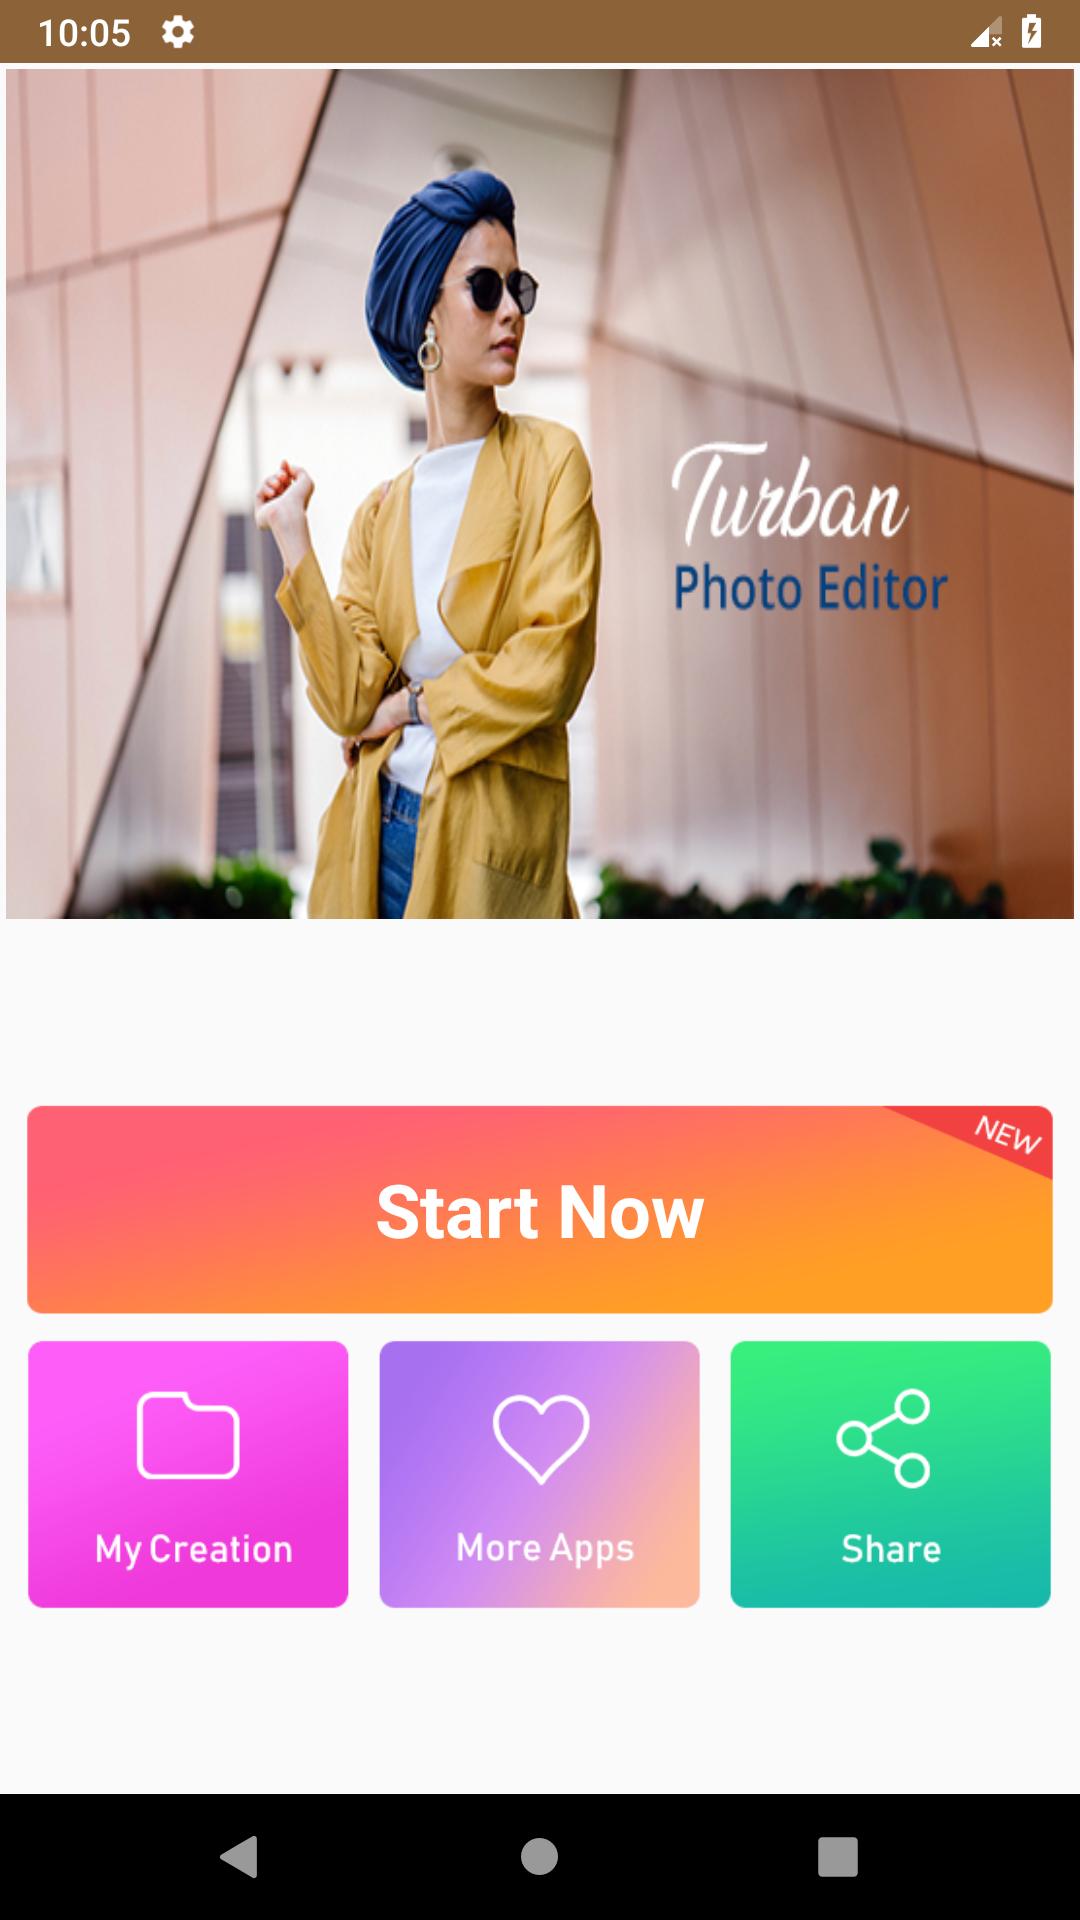 Turban Photo Editor 3.0.1 Screenshot 1